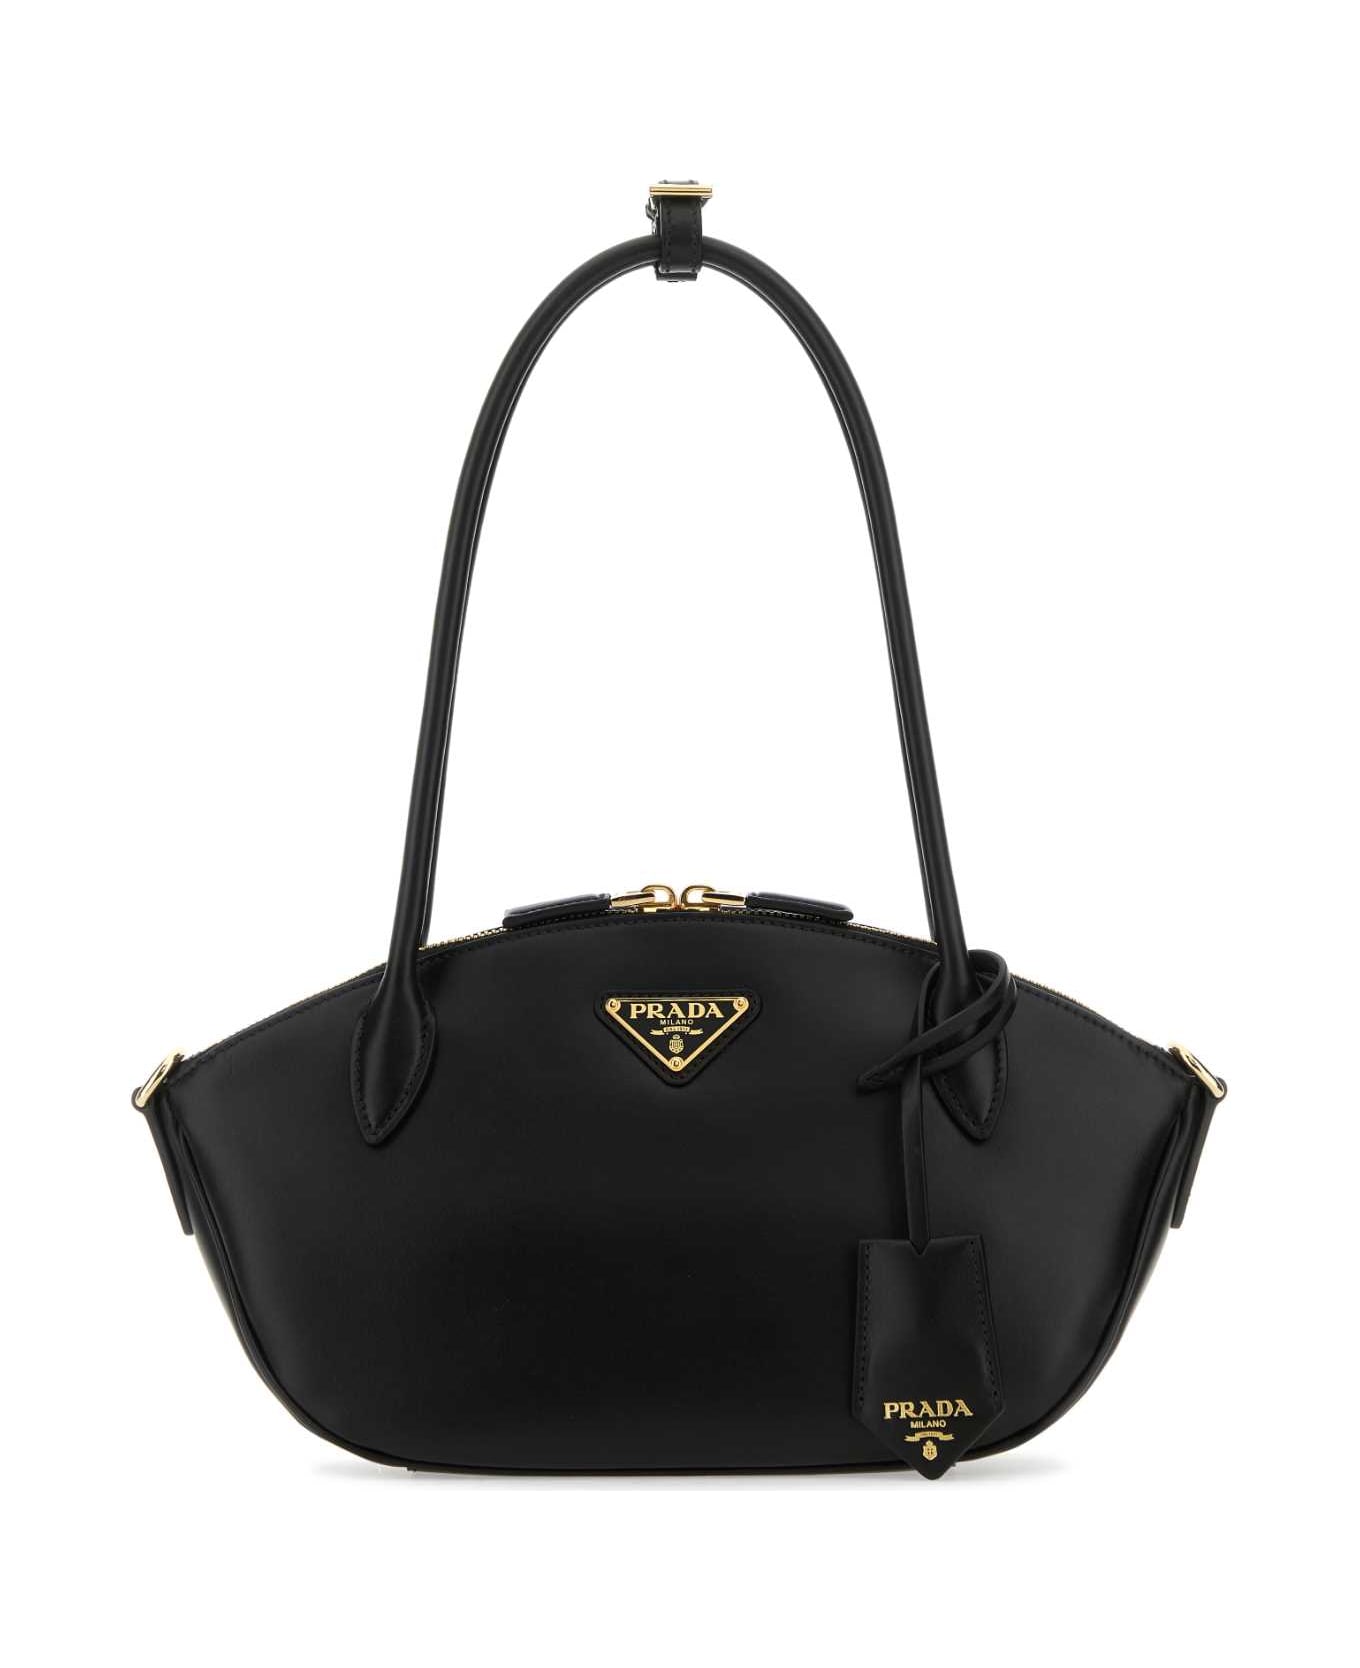 Prada Black Leather Small Handbag - NERO